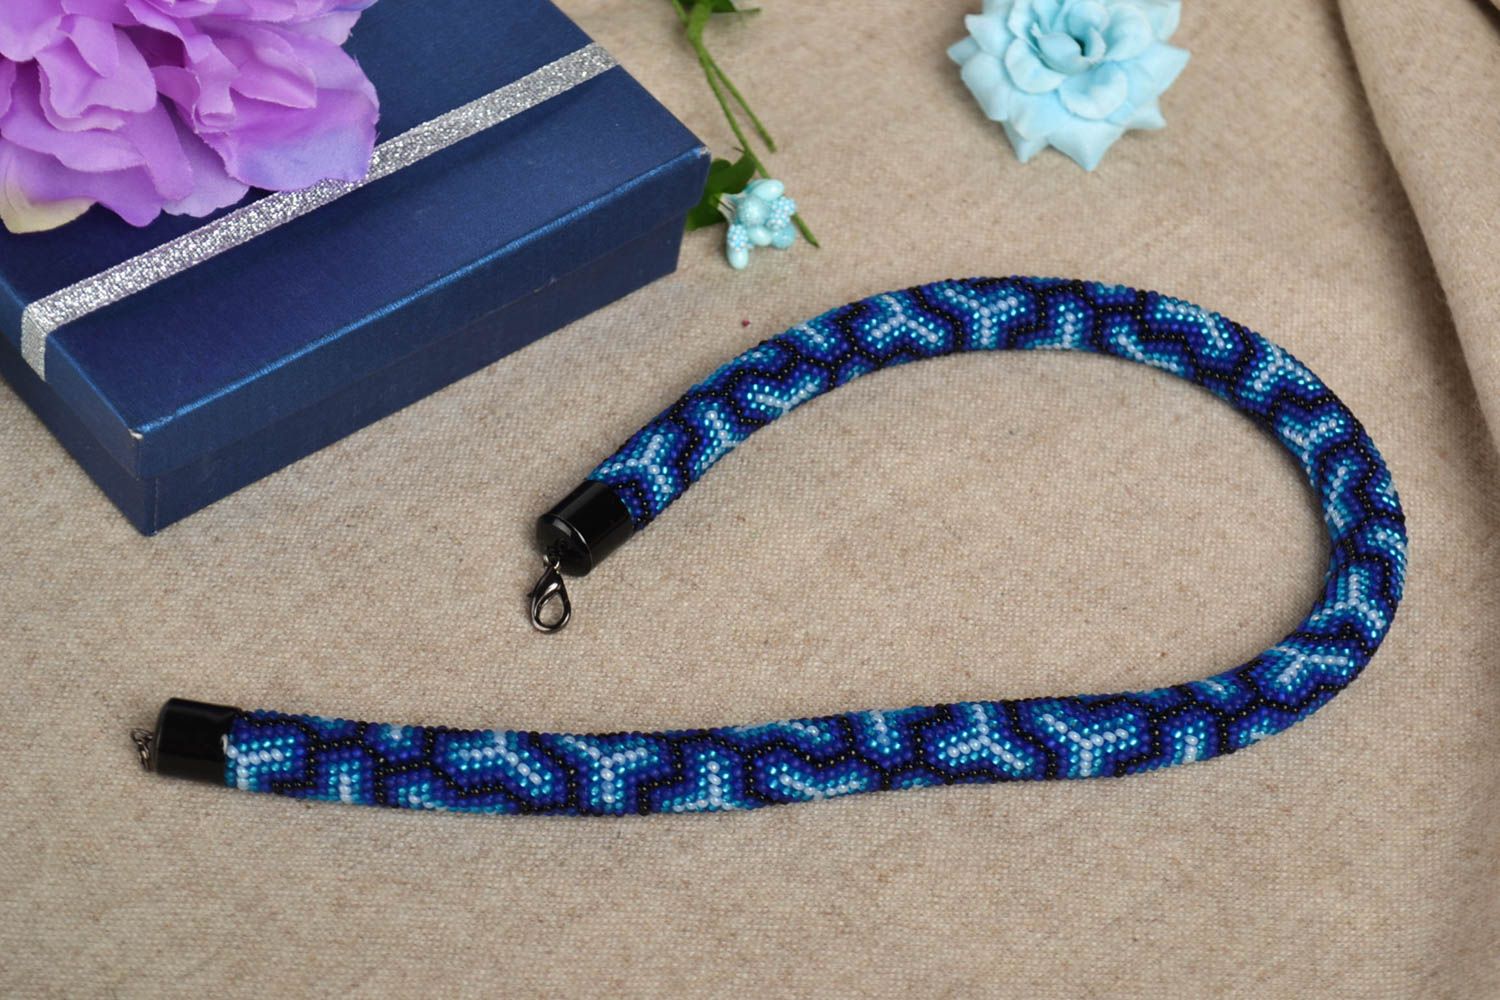 Handmade beaded cord evening necklace handmade accessories beaded jewelry photo 1